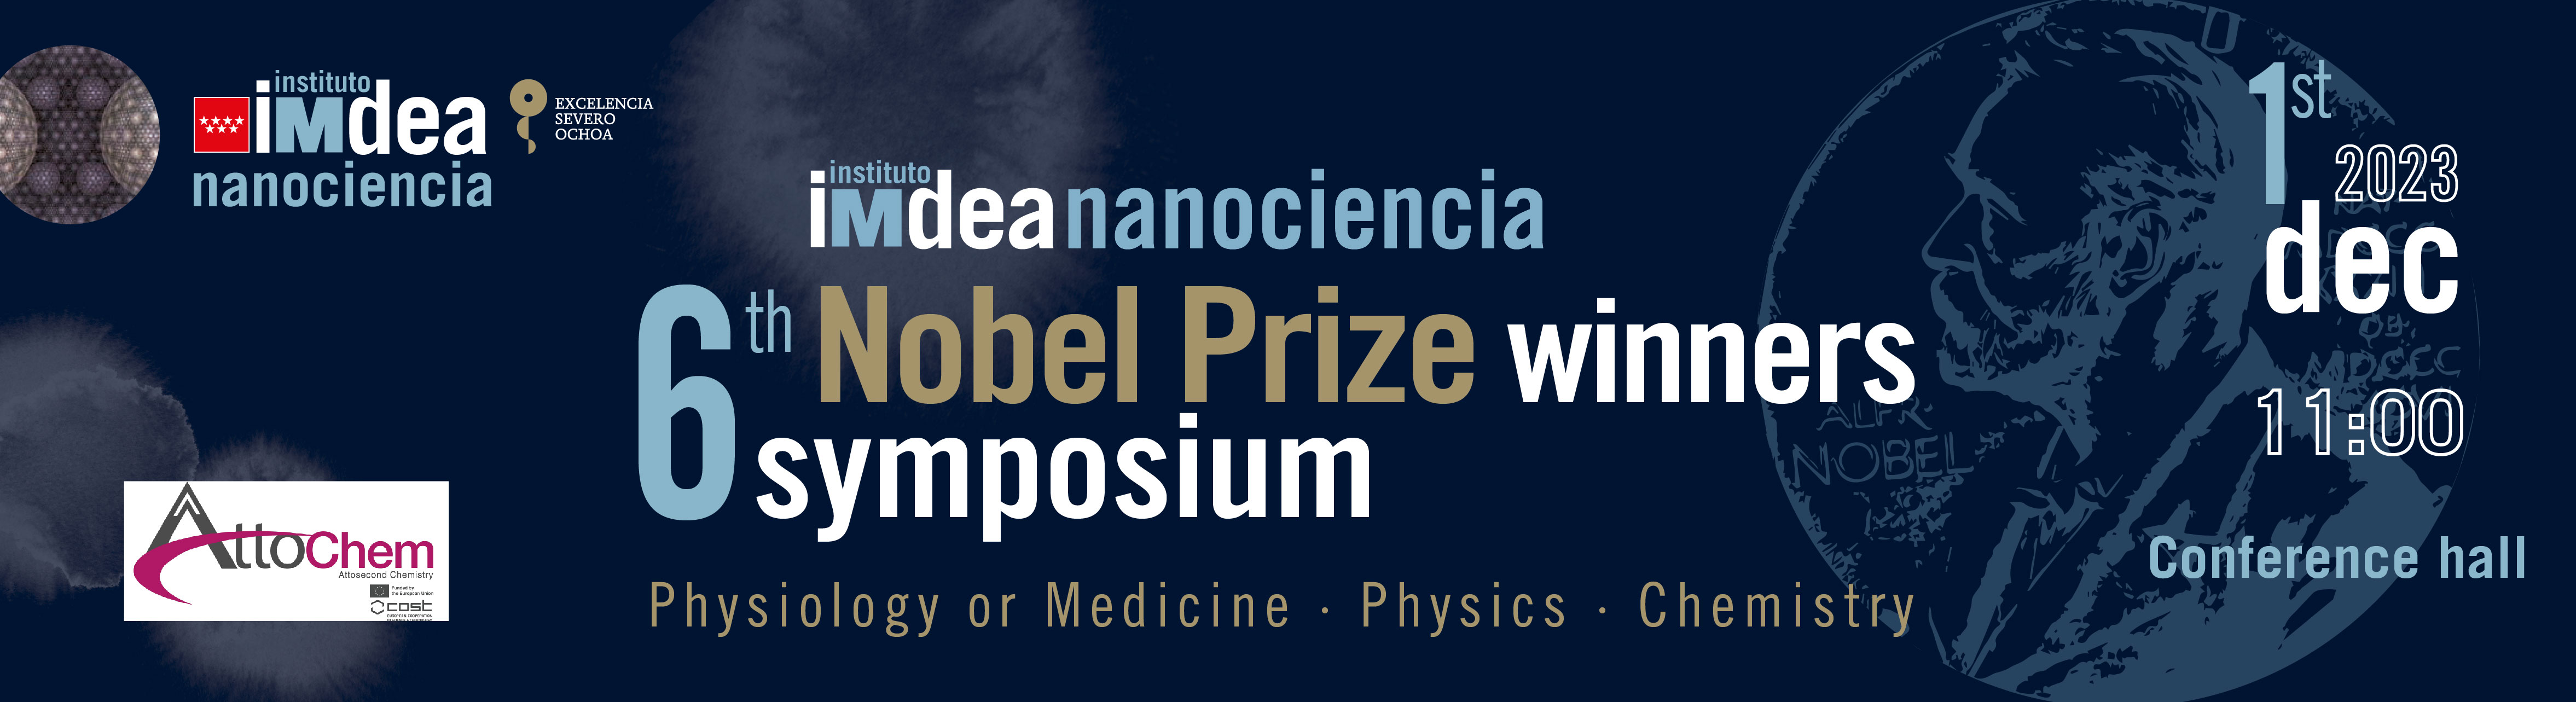 nobel symposium banner